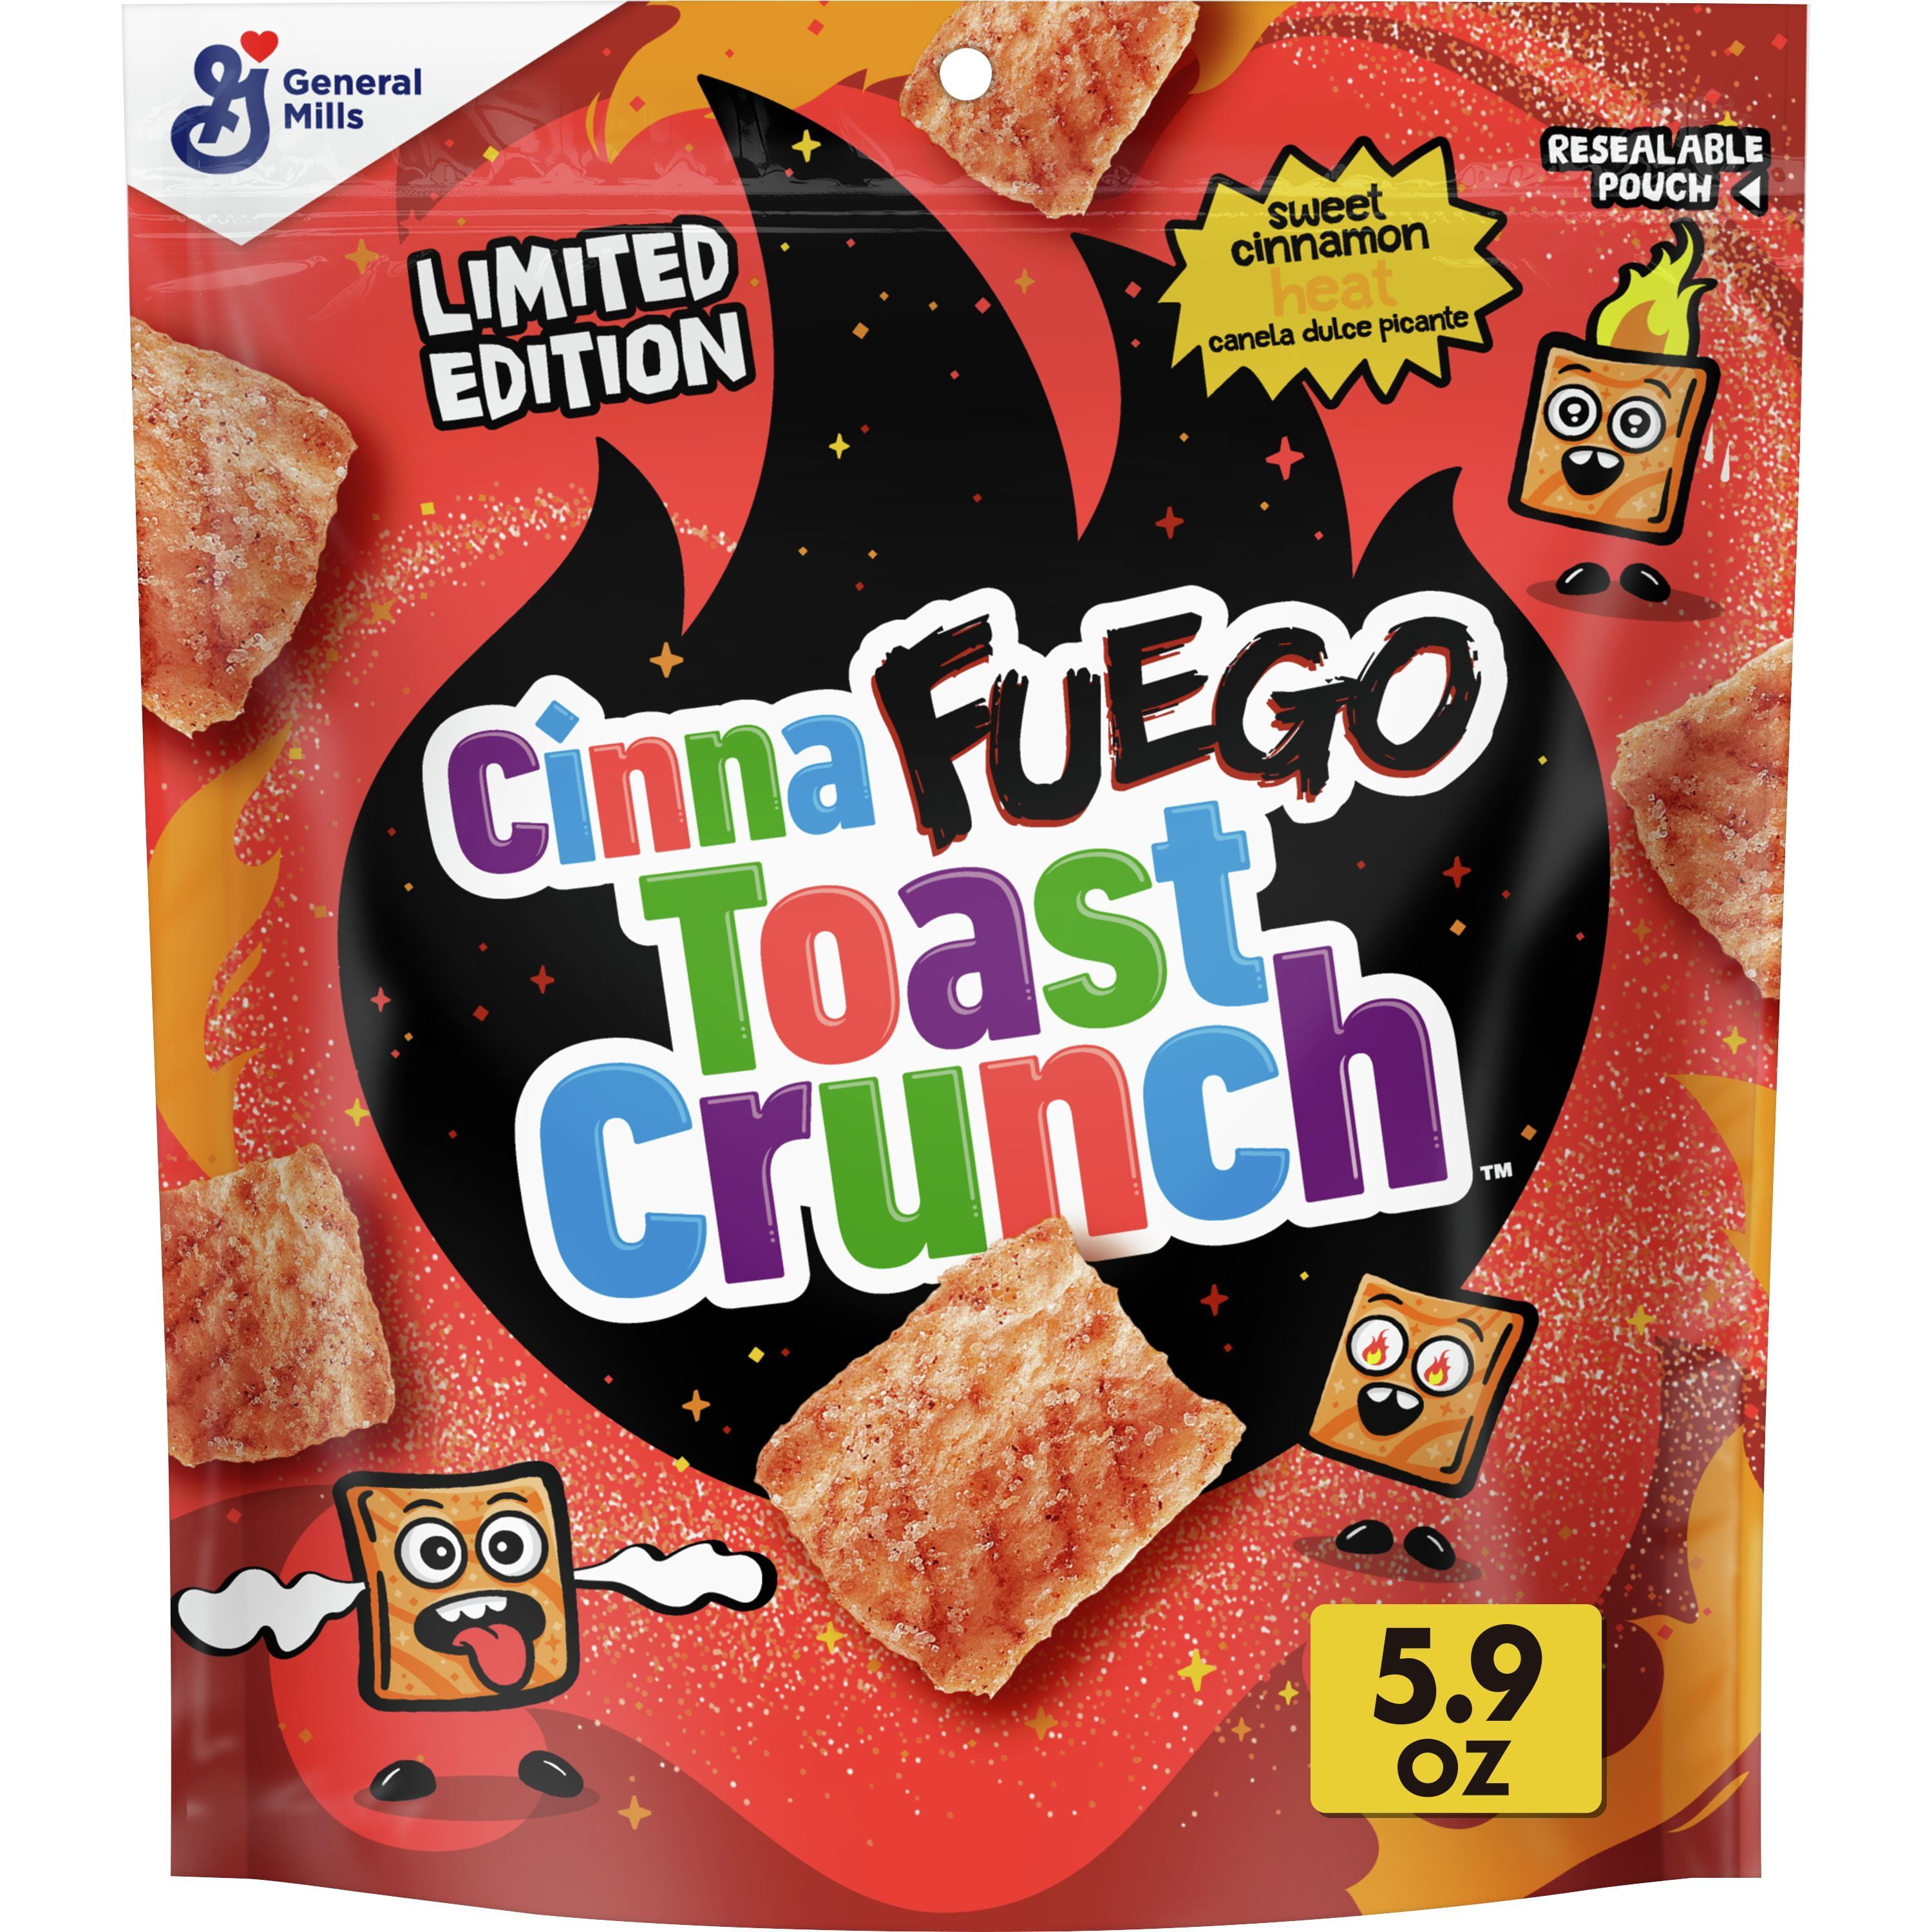 Cinnamon Toast Crunch CinnaFuego Toast Crunch, Sweet and Spicy Breakfast Cereal Snack, 5.9 OZ